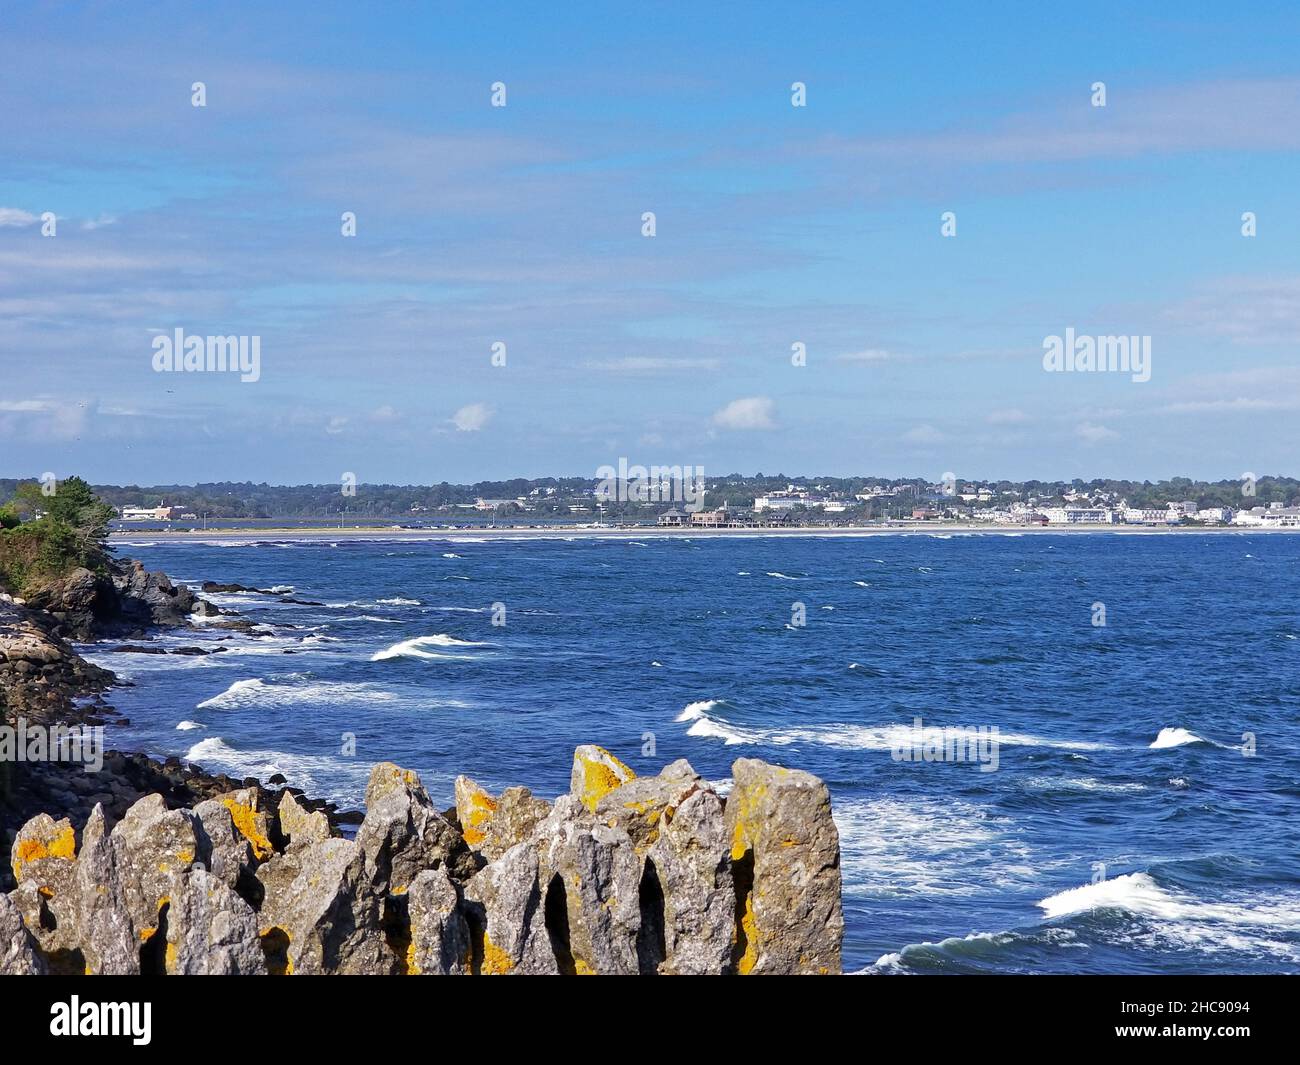 Ocean waves crashing into rocky shore at Newport, Rhode Island -07 Stock Photo